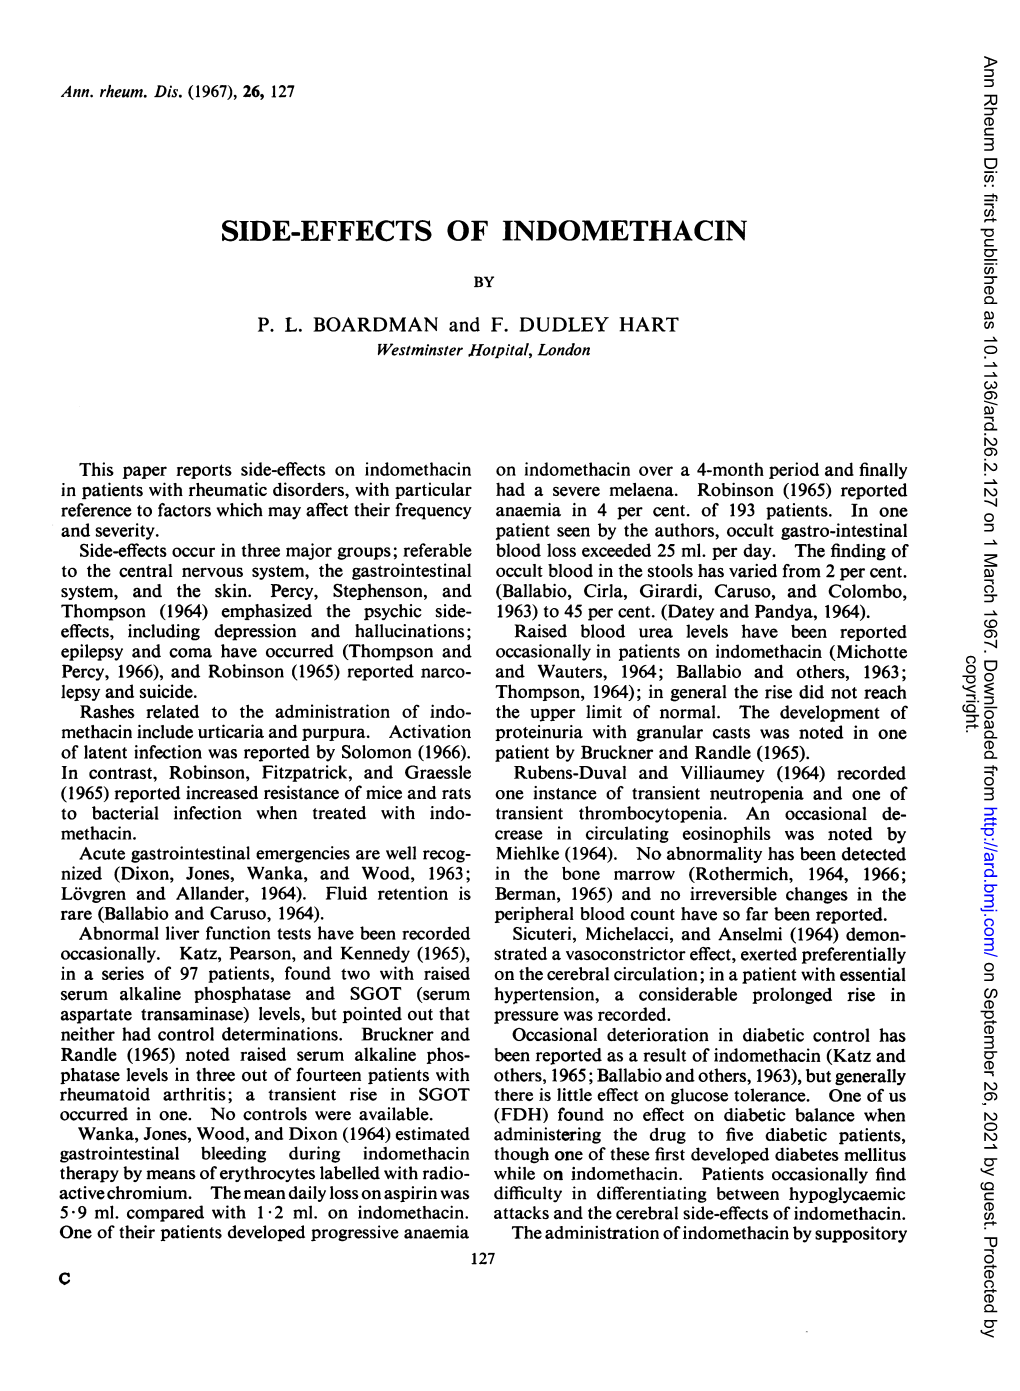 Side-Effects of Indomethacin